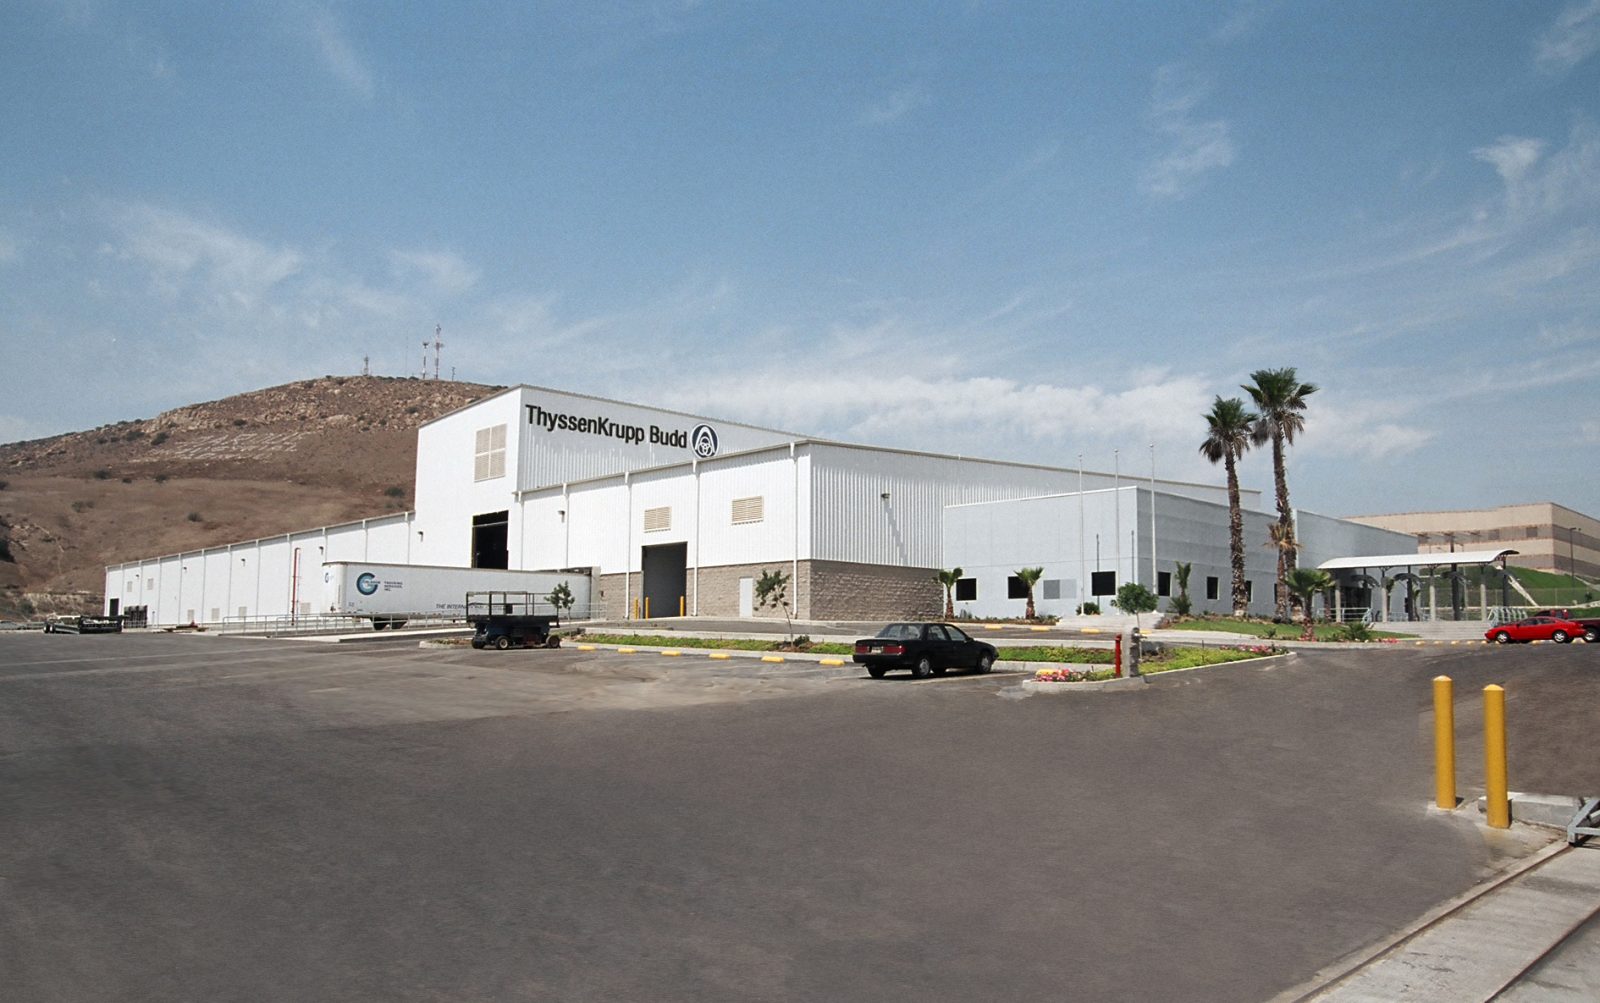 Panoramic shot of Thyssenkrupp Budd industrial building in Tijuana, Baja California